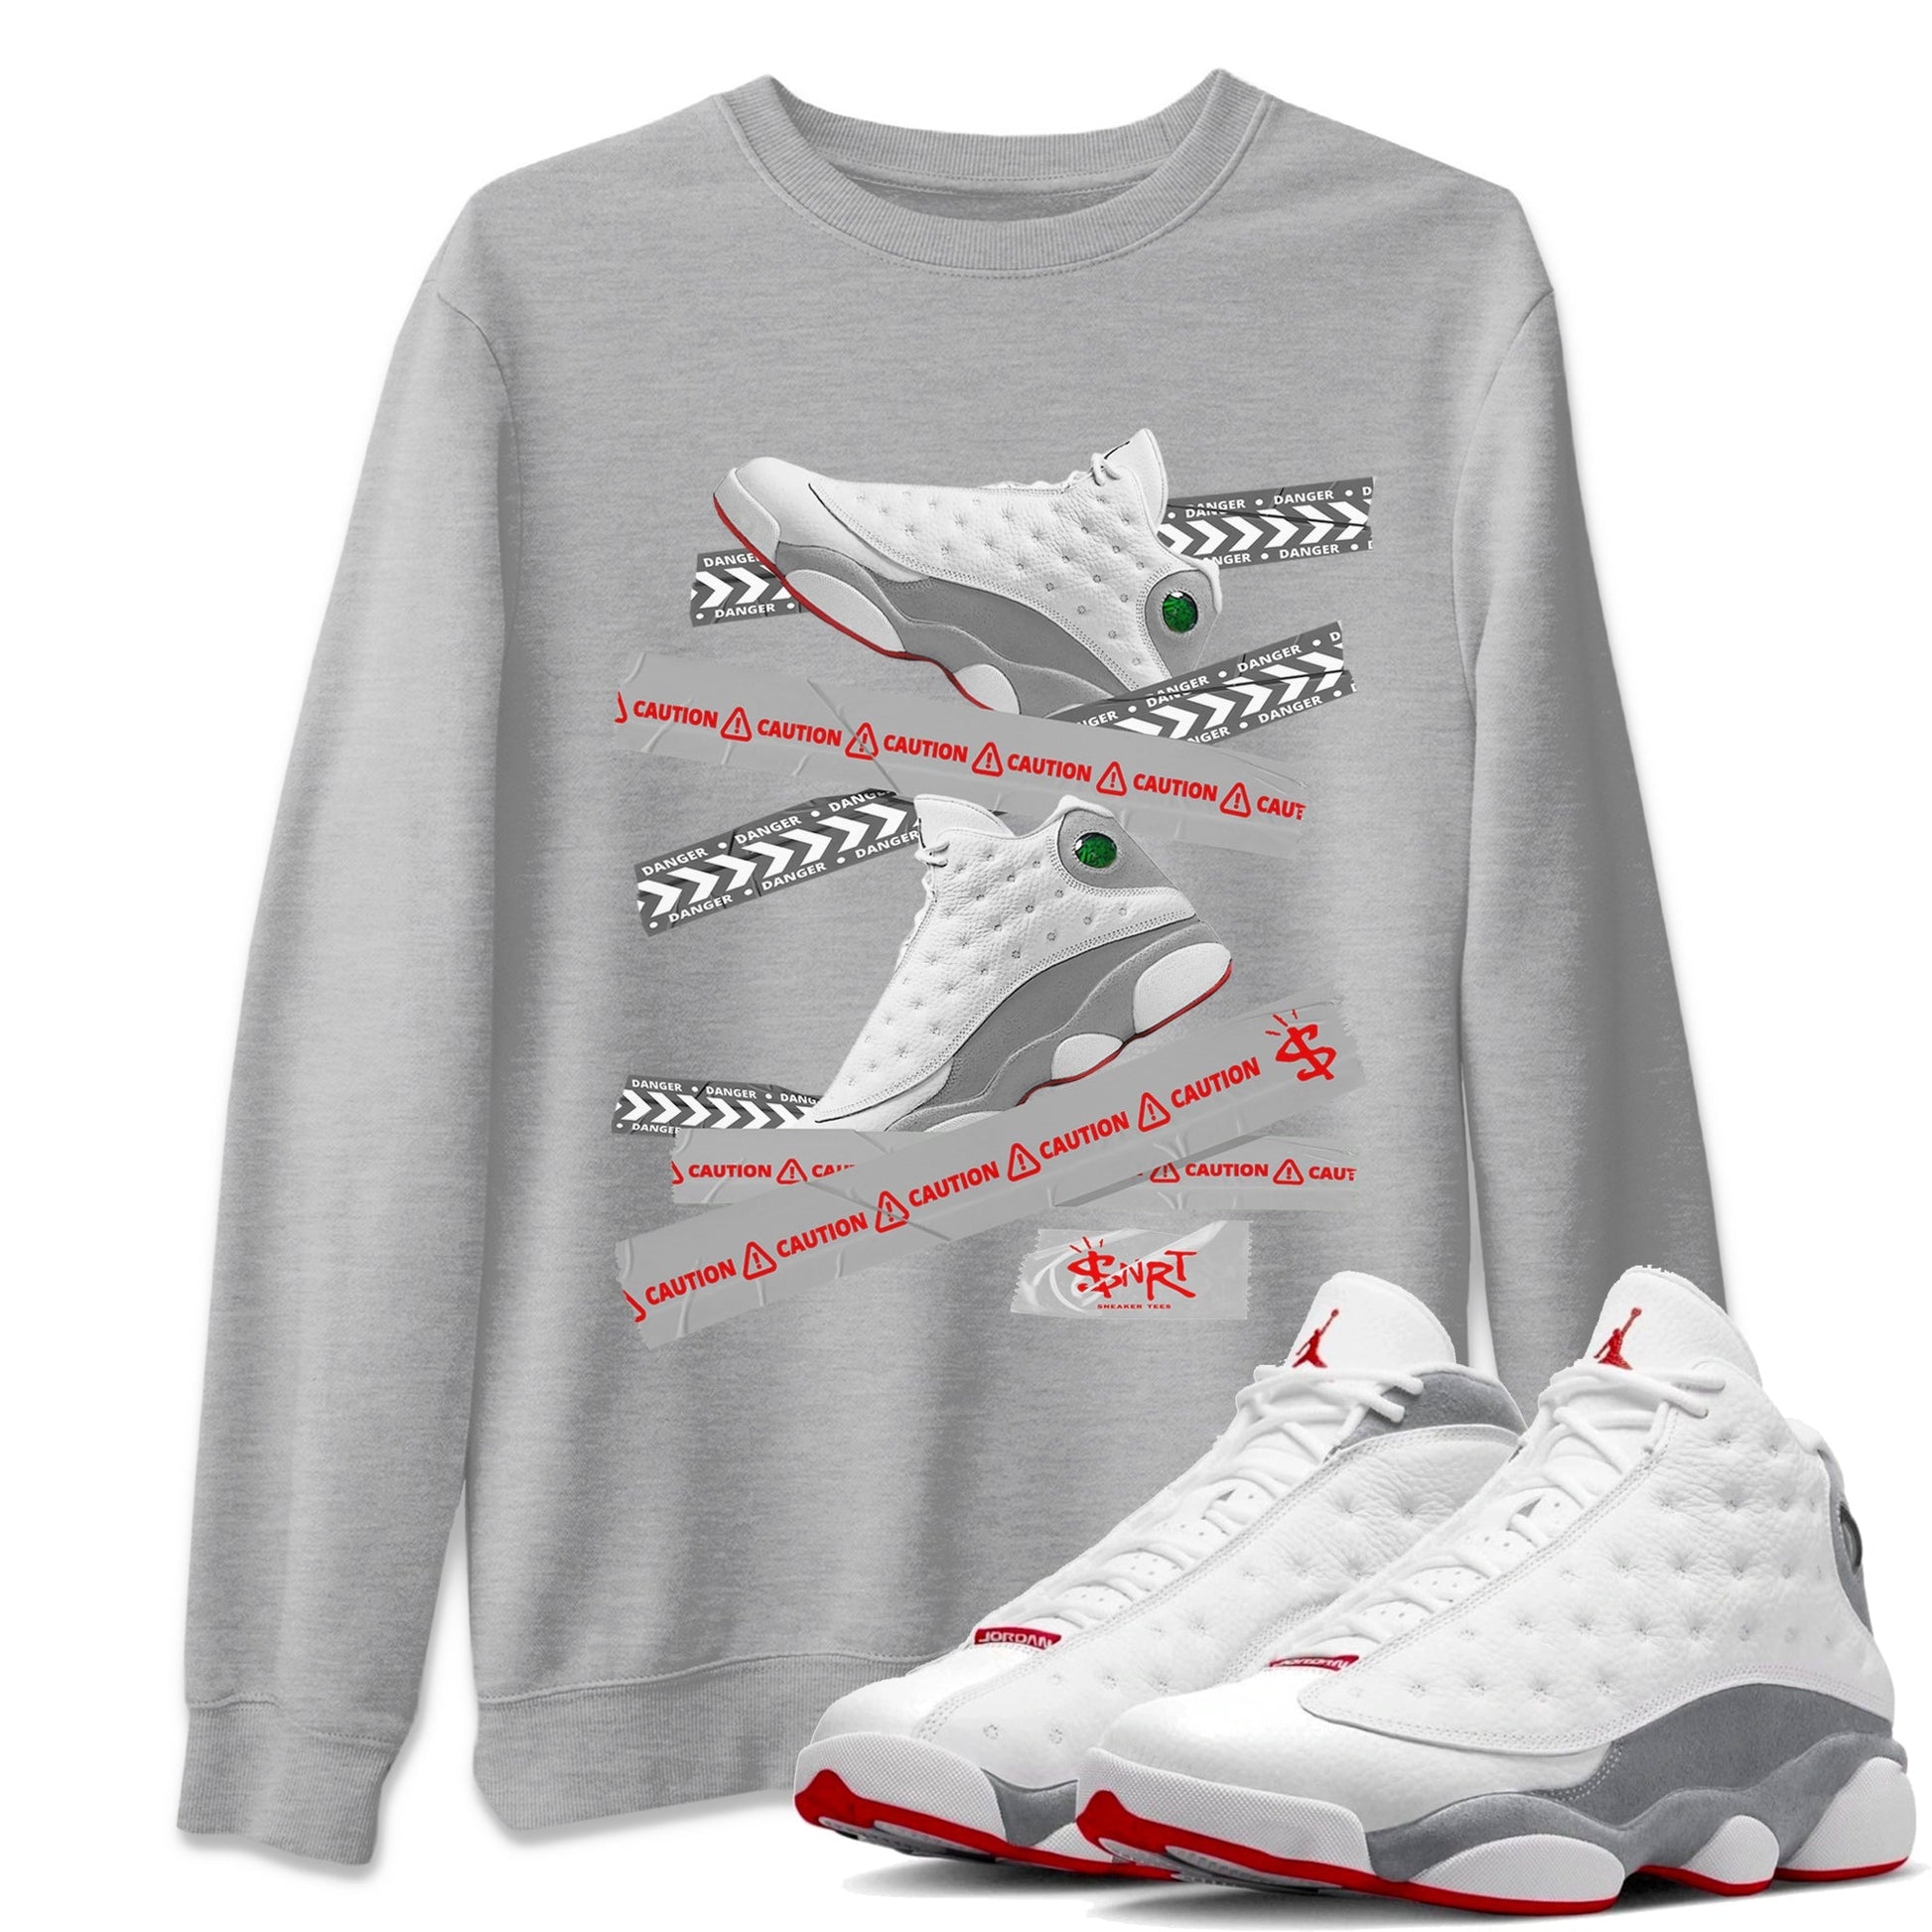 Air Jordan 13 Wolf Grey Sneaker Match Tees Caution Tape Sneaker Tees 13s Wolf Grey Sneaker Release Tees Unisex Shirts Heather Grey 1